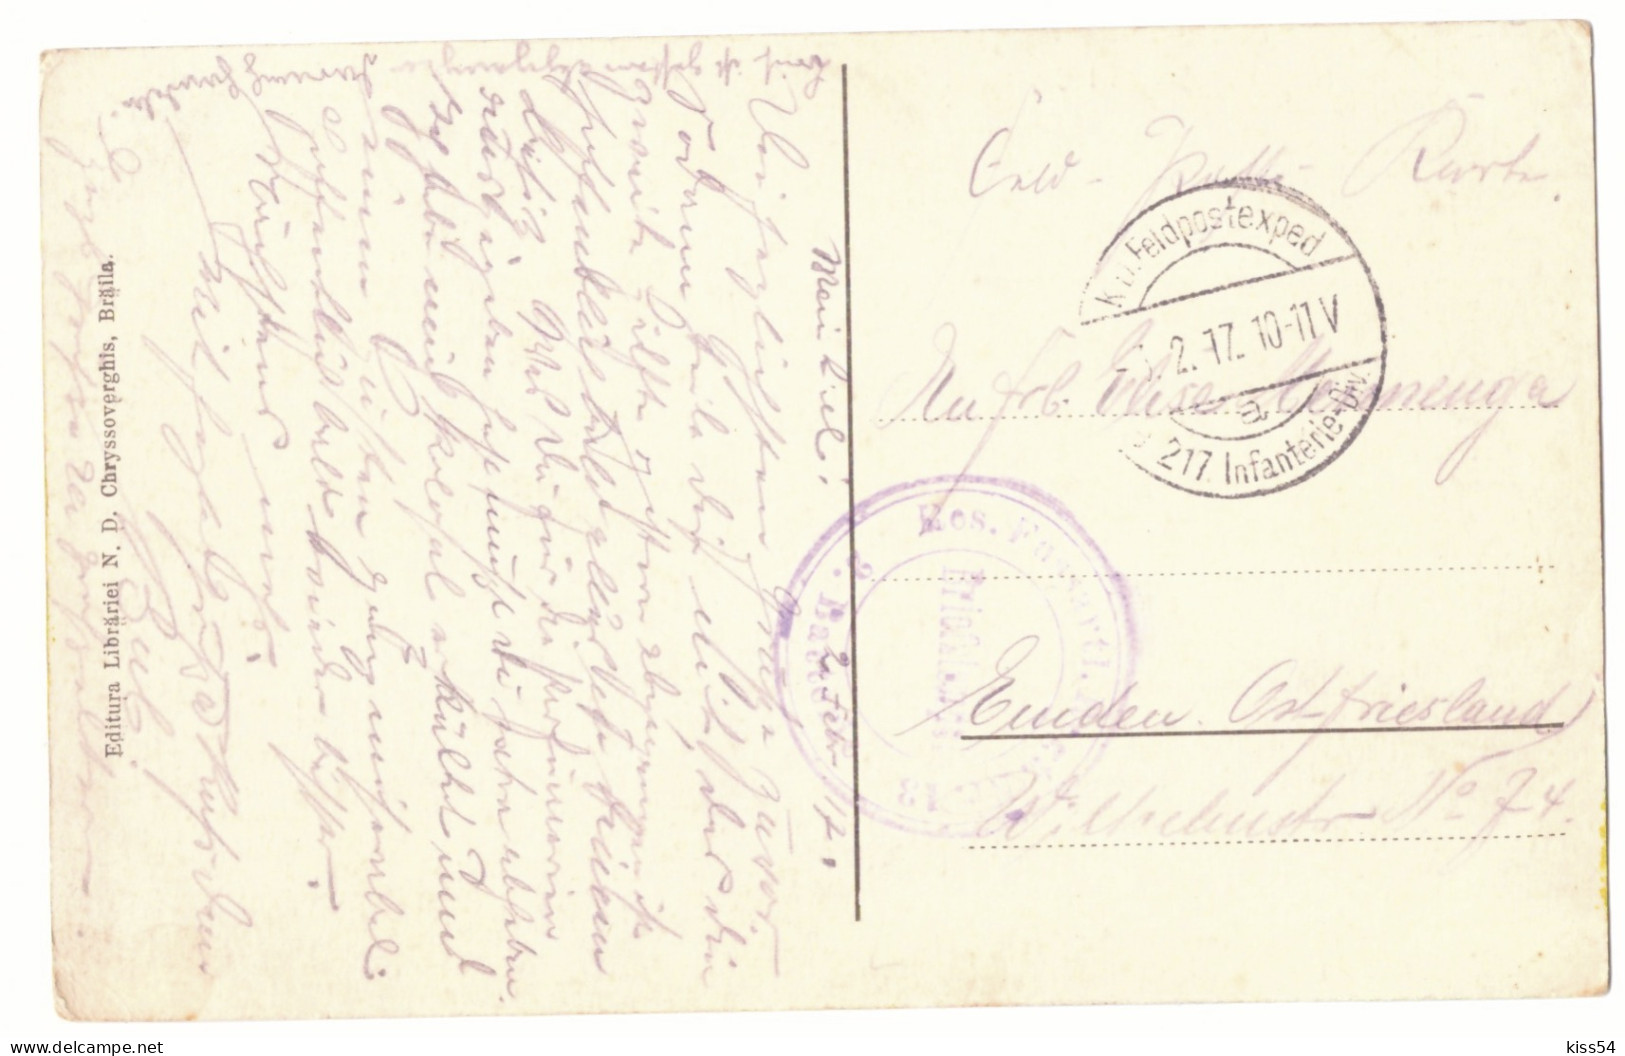 RO 40 - 21163 LACUL SARAT, Braila, Romania - Old Postcard, CENSOR - Used - 1917 - Rumänien